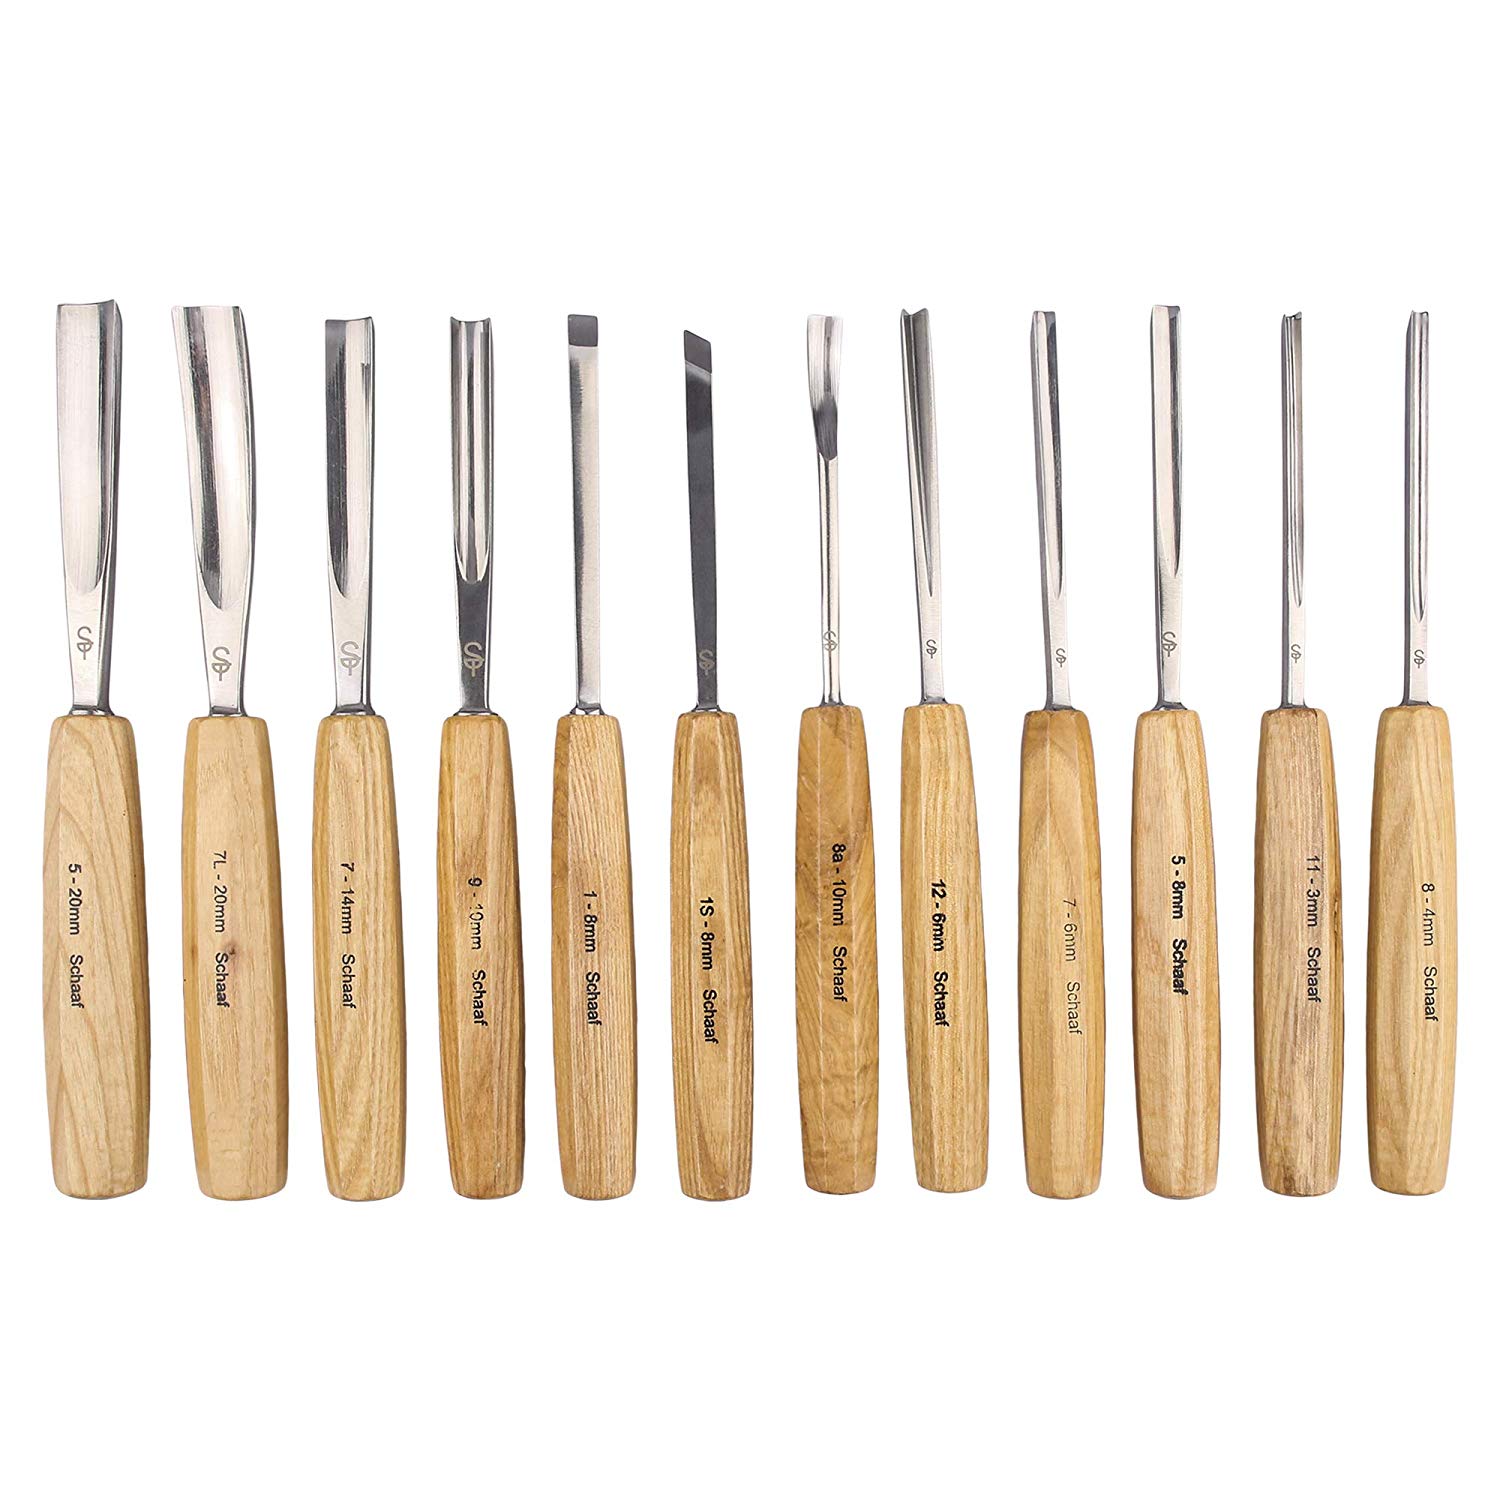 Schaaf Tools 12-piece wood carving tool set